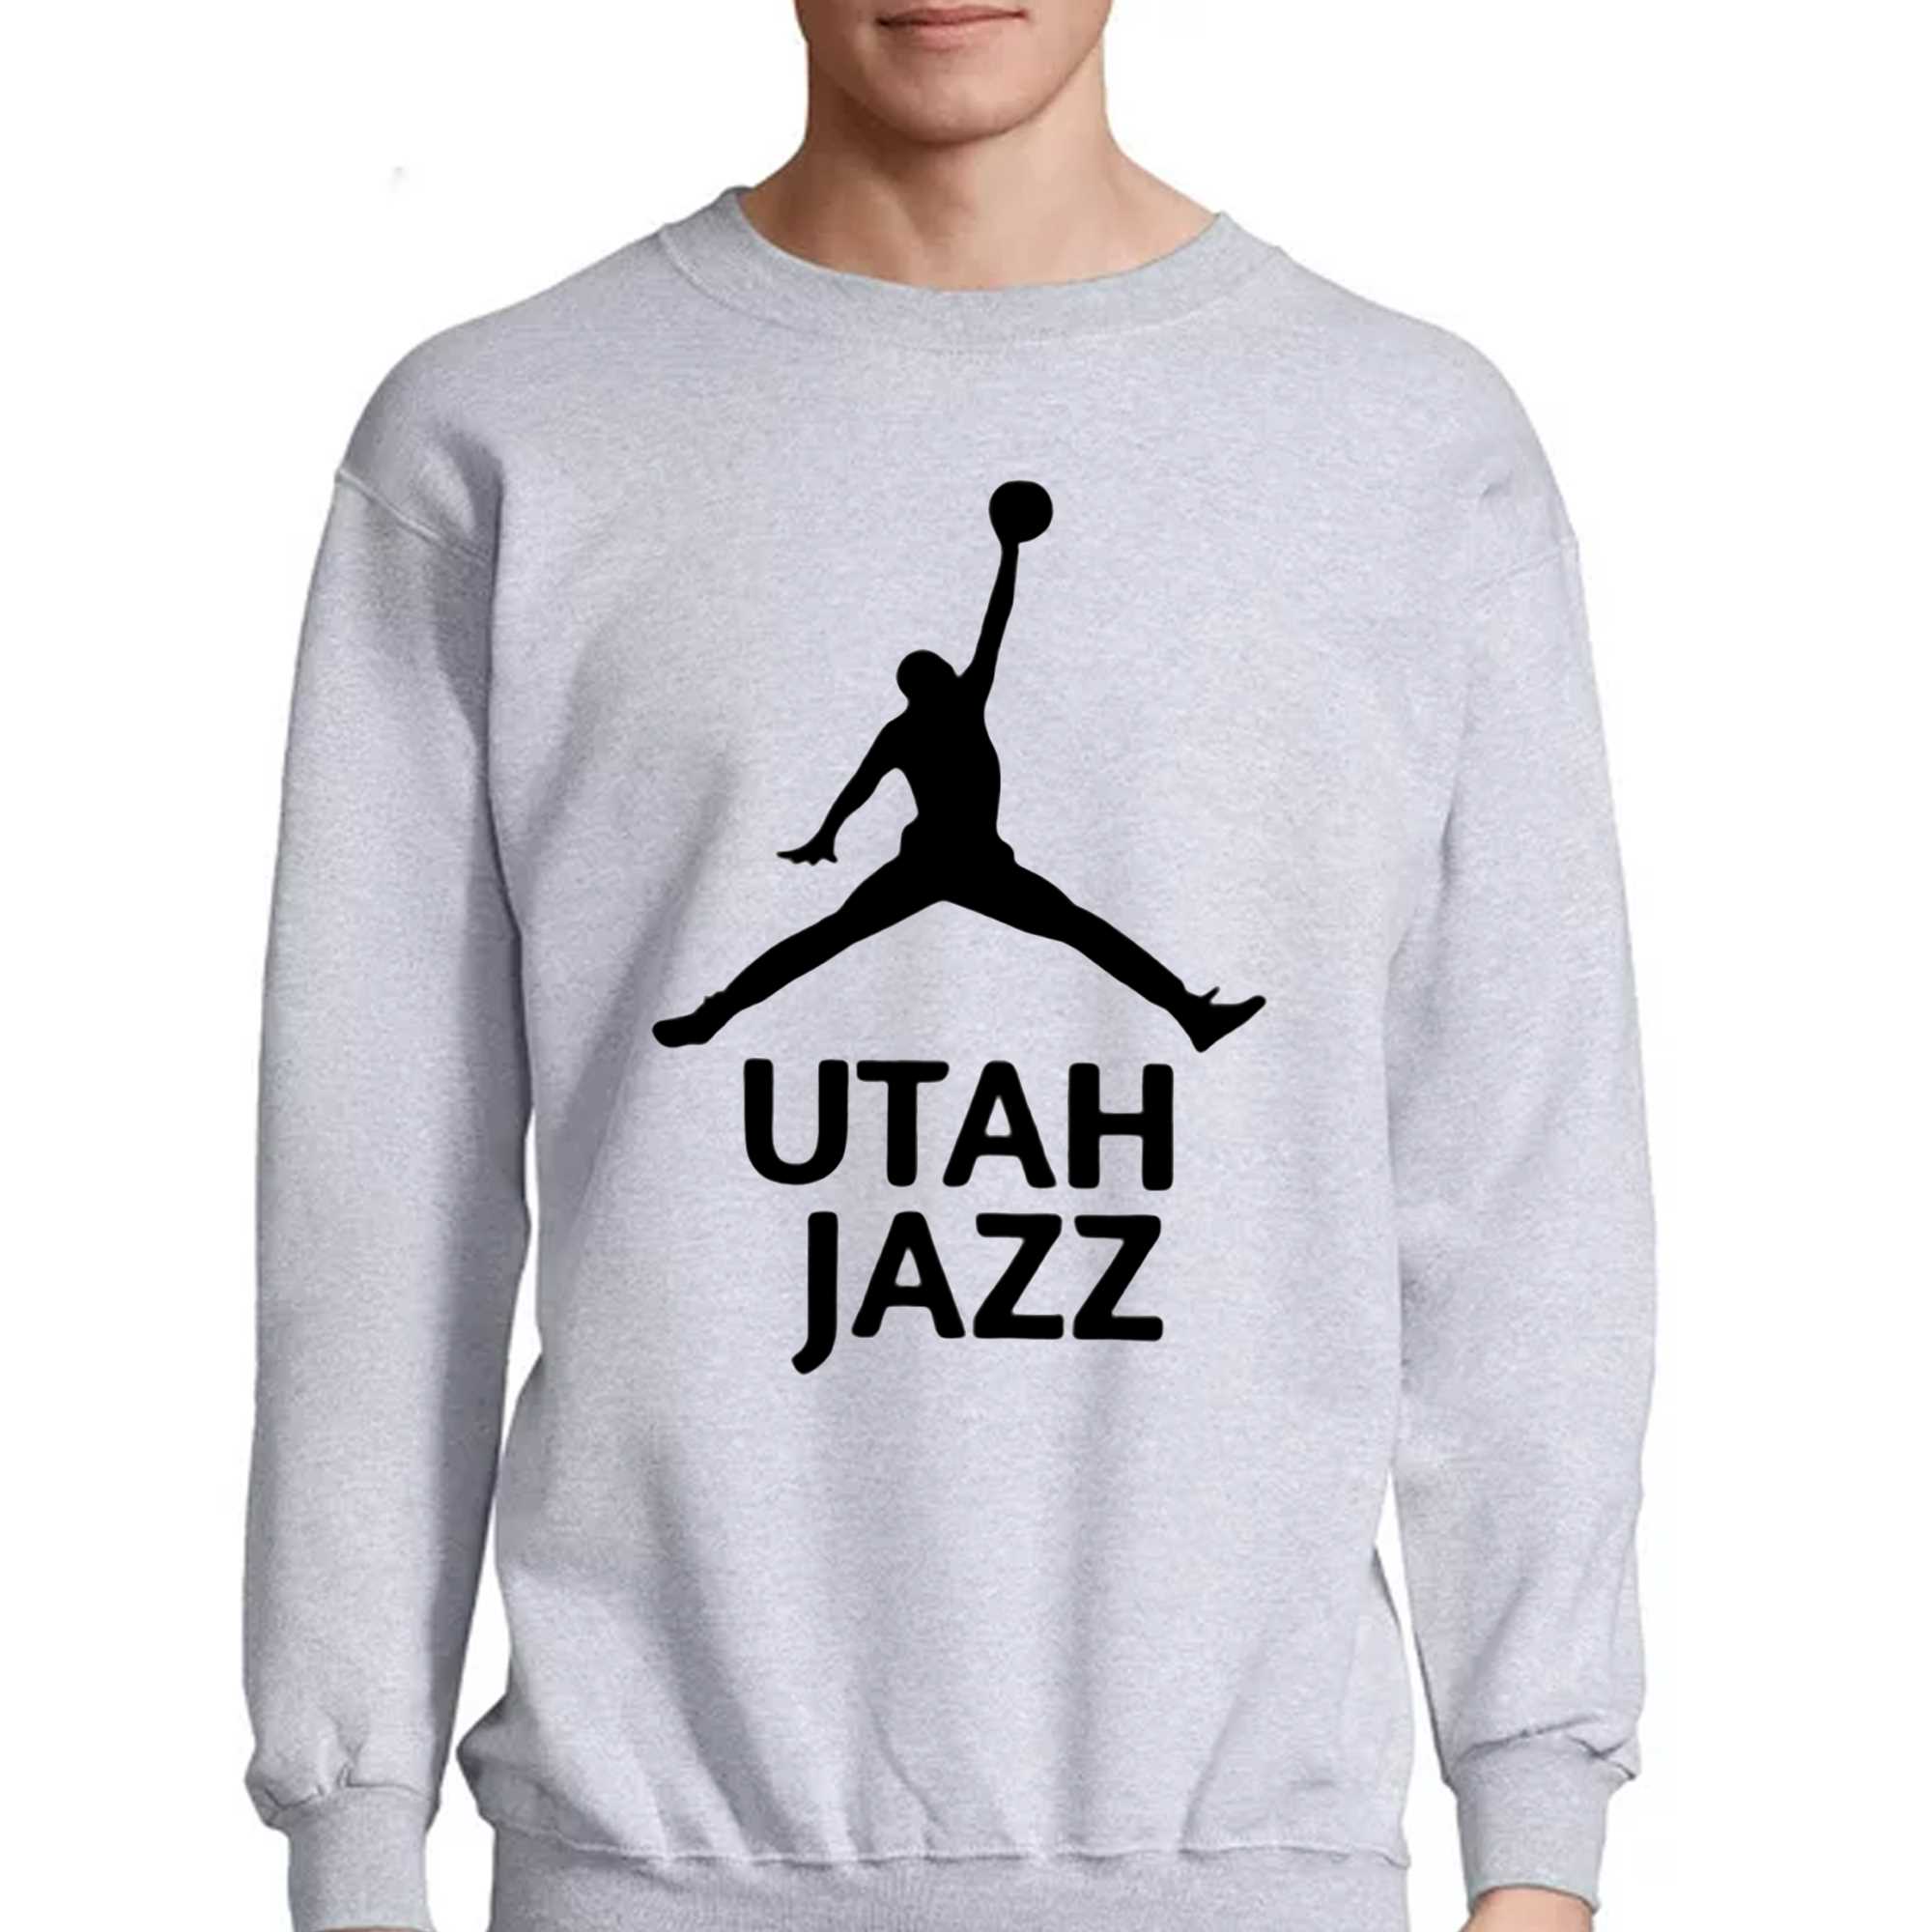 Utah Jazz Jumpman Shirt - Shibtee Clothing